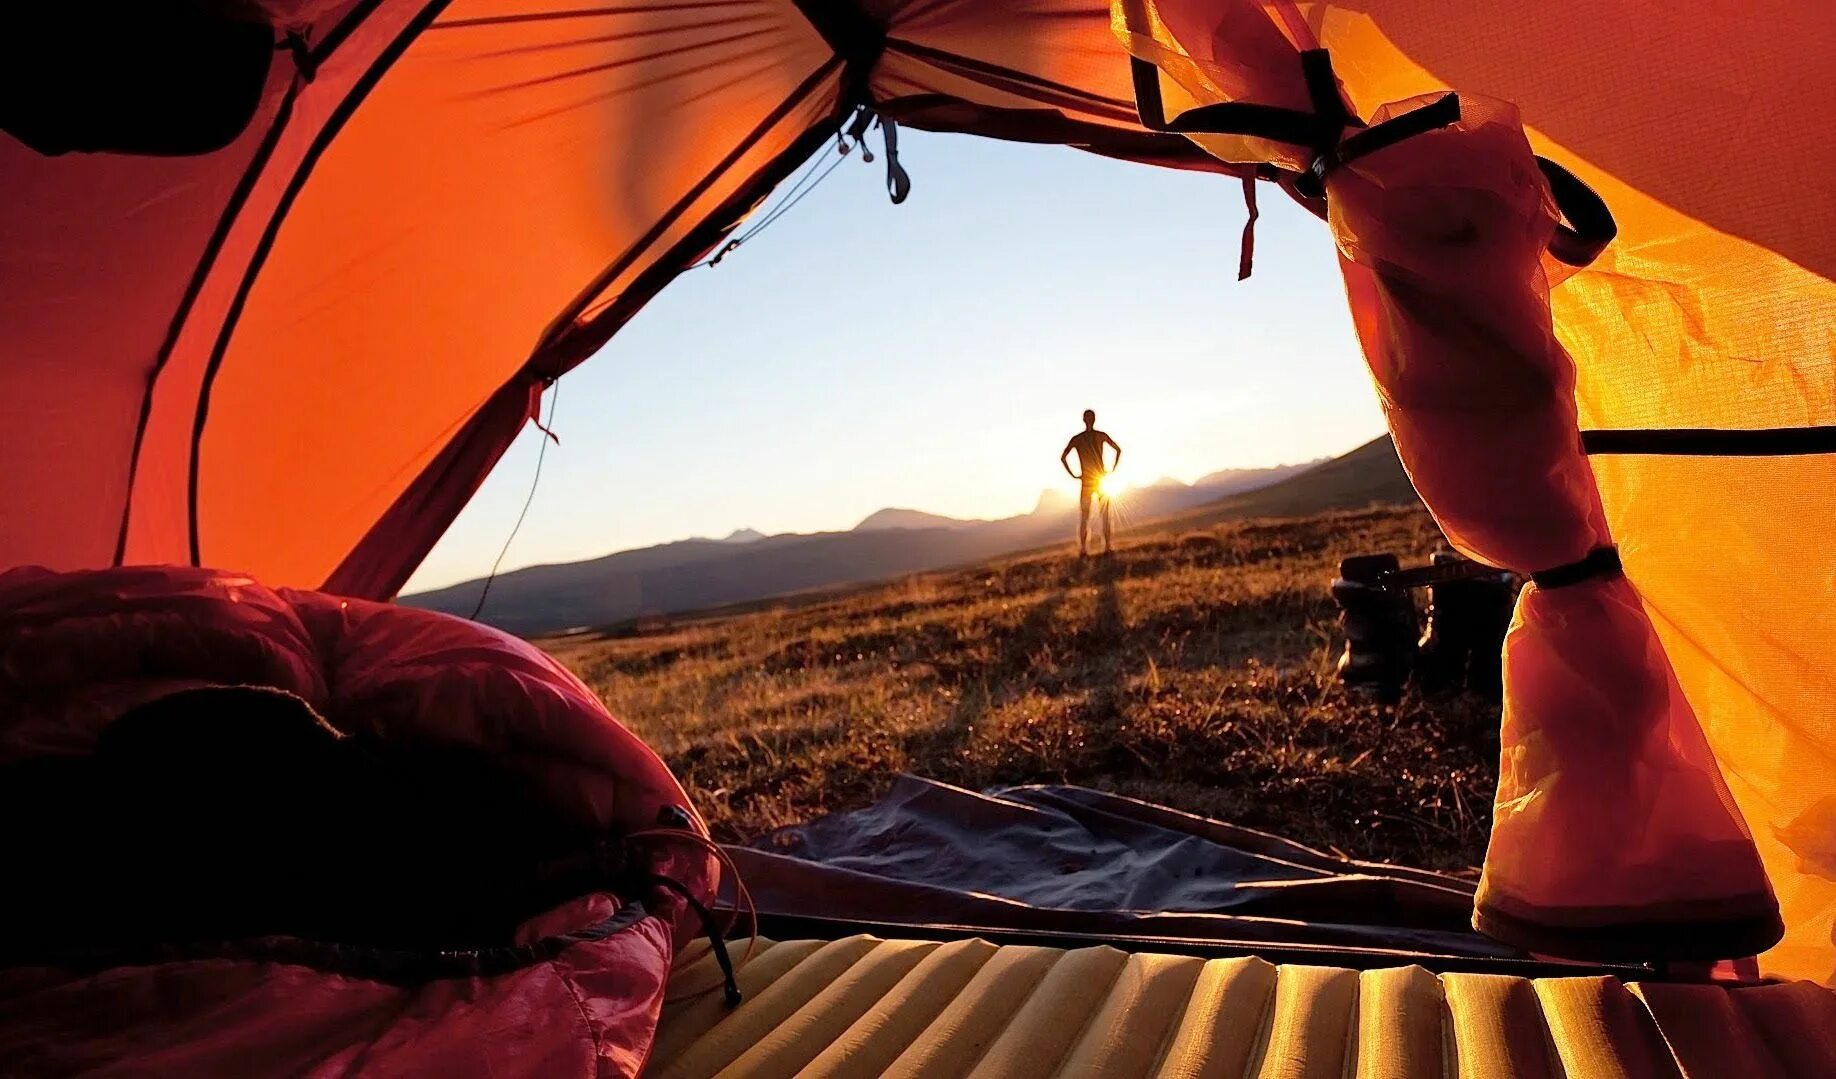 Fun trips. Палатка. Красивая палатка. Вид из палатки. Палатка на закате.